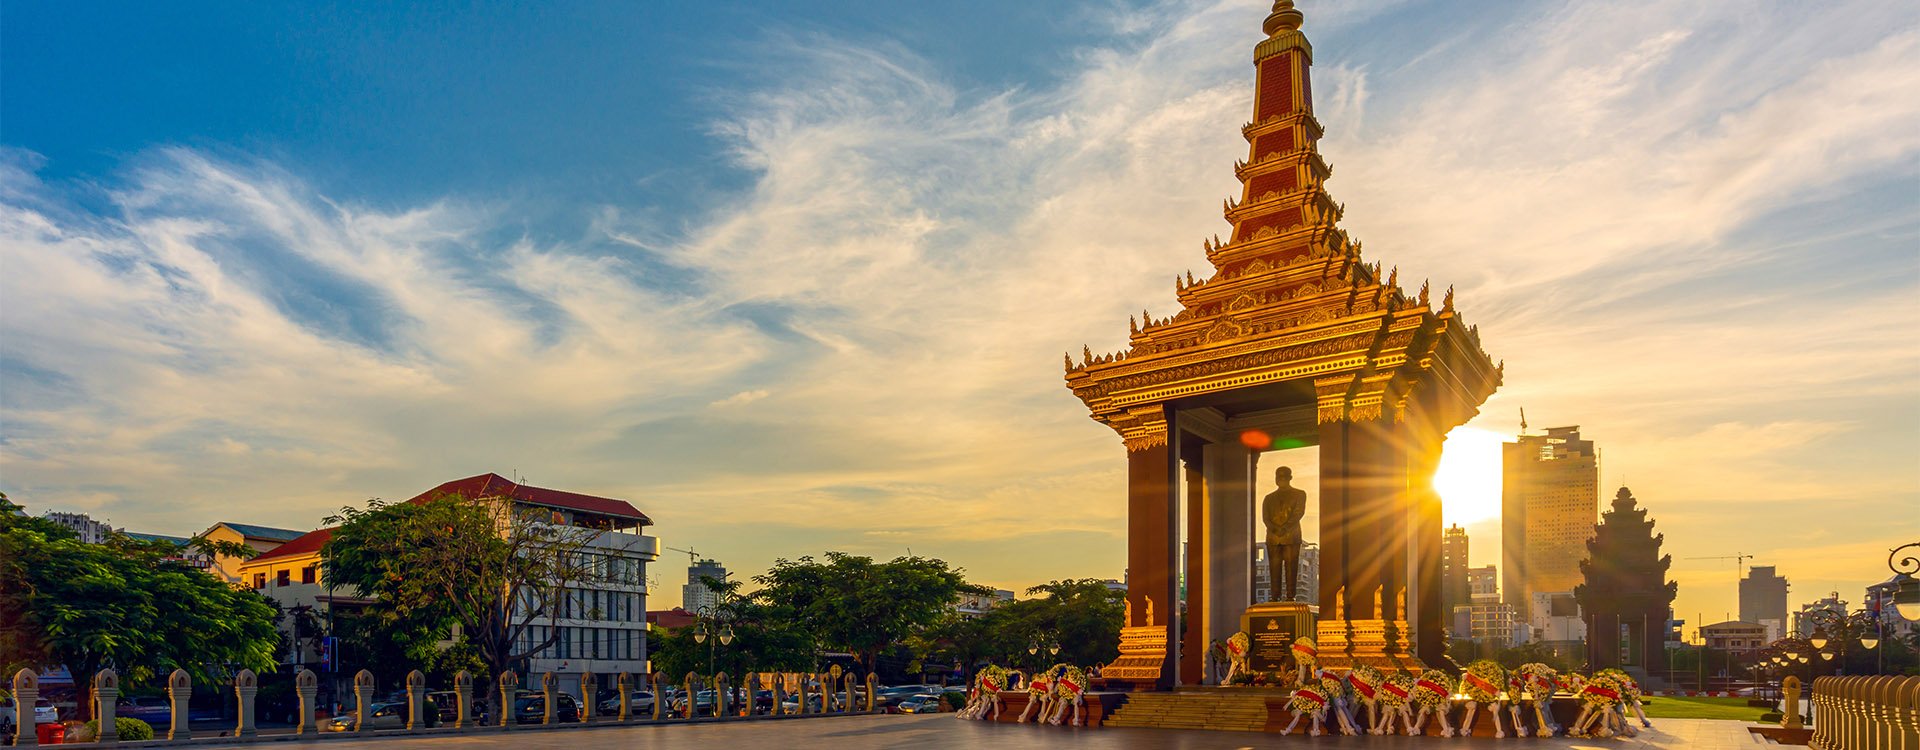 Cambodia, Phnom Penh, statue of King Father Norodom Sihanouk